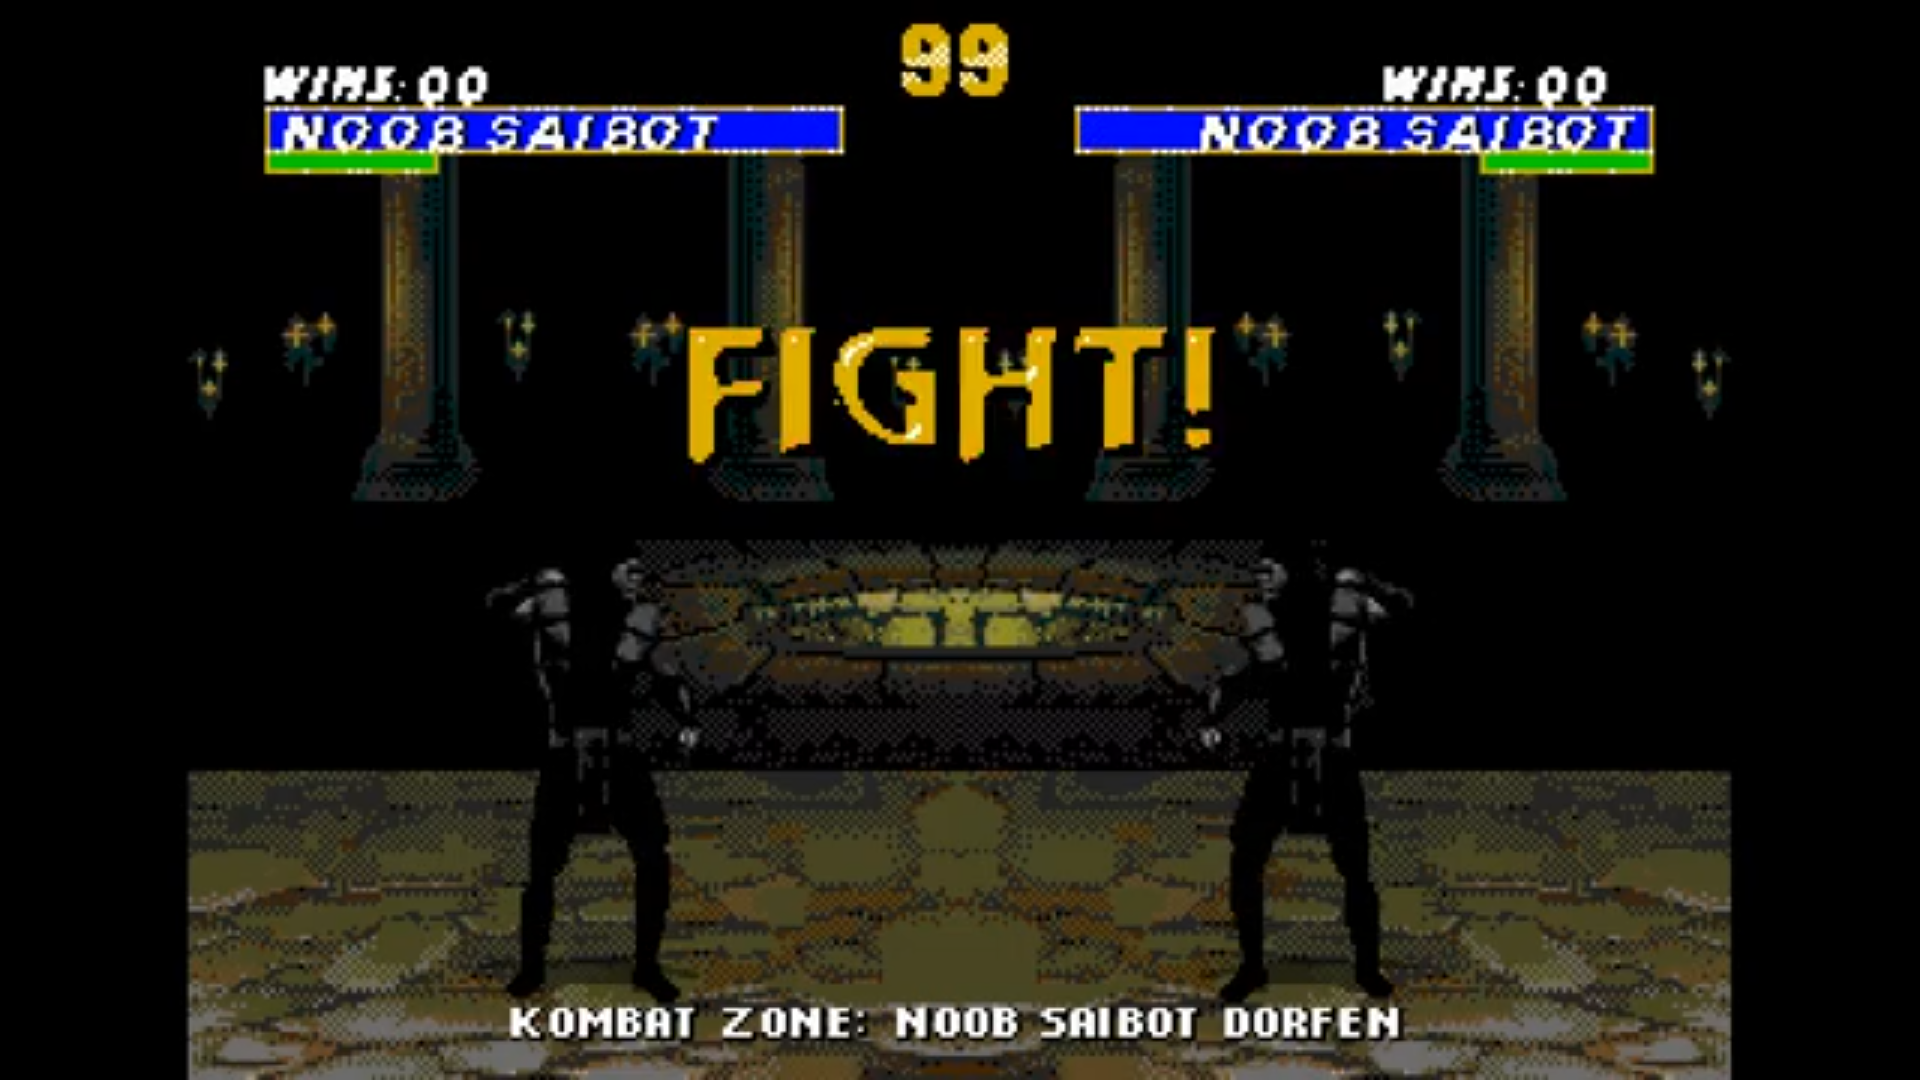 A screenshot of Noob Saibot against Noob Saibot in Noob Saibot's Dorfen in Mortal Kombat. 